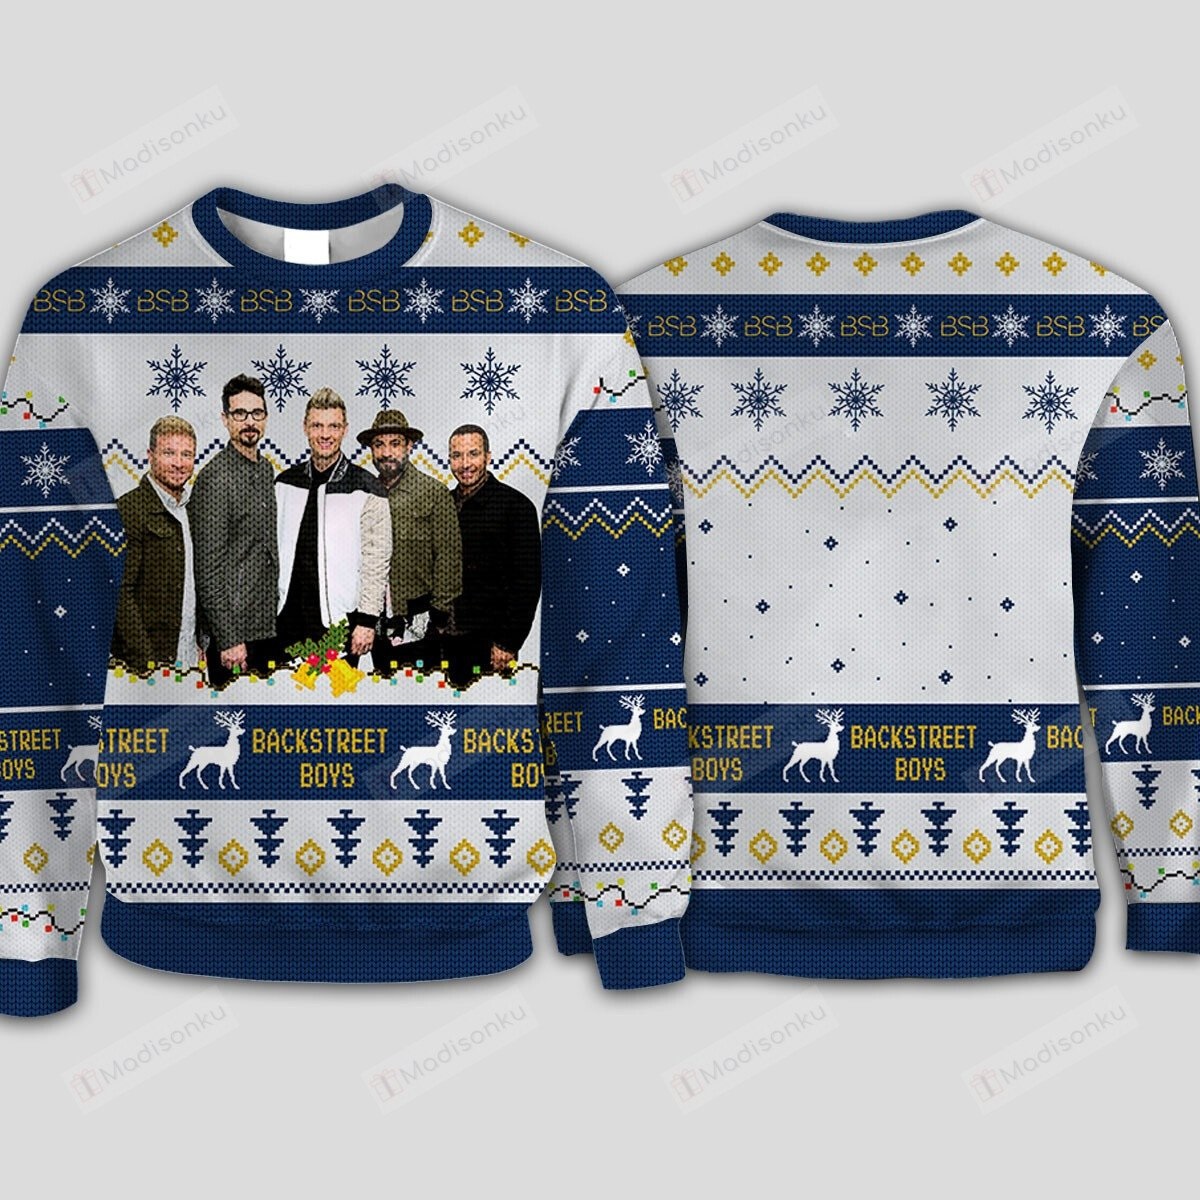 [ Amazing ] Backstreet Boys ugly christmas sweater – Saleoff 301121